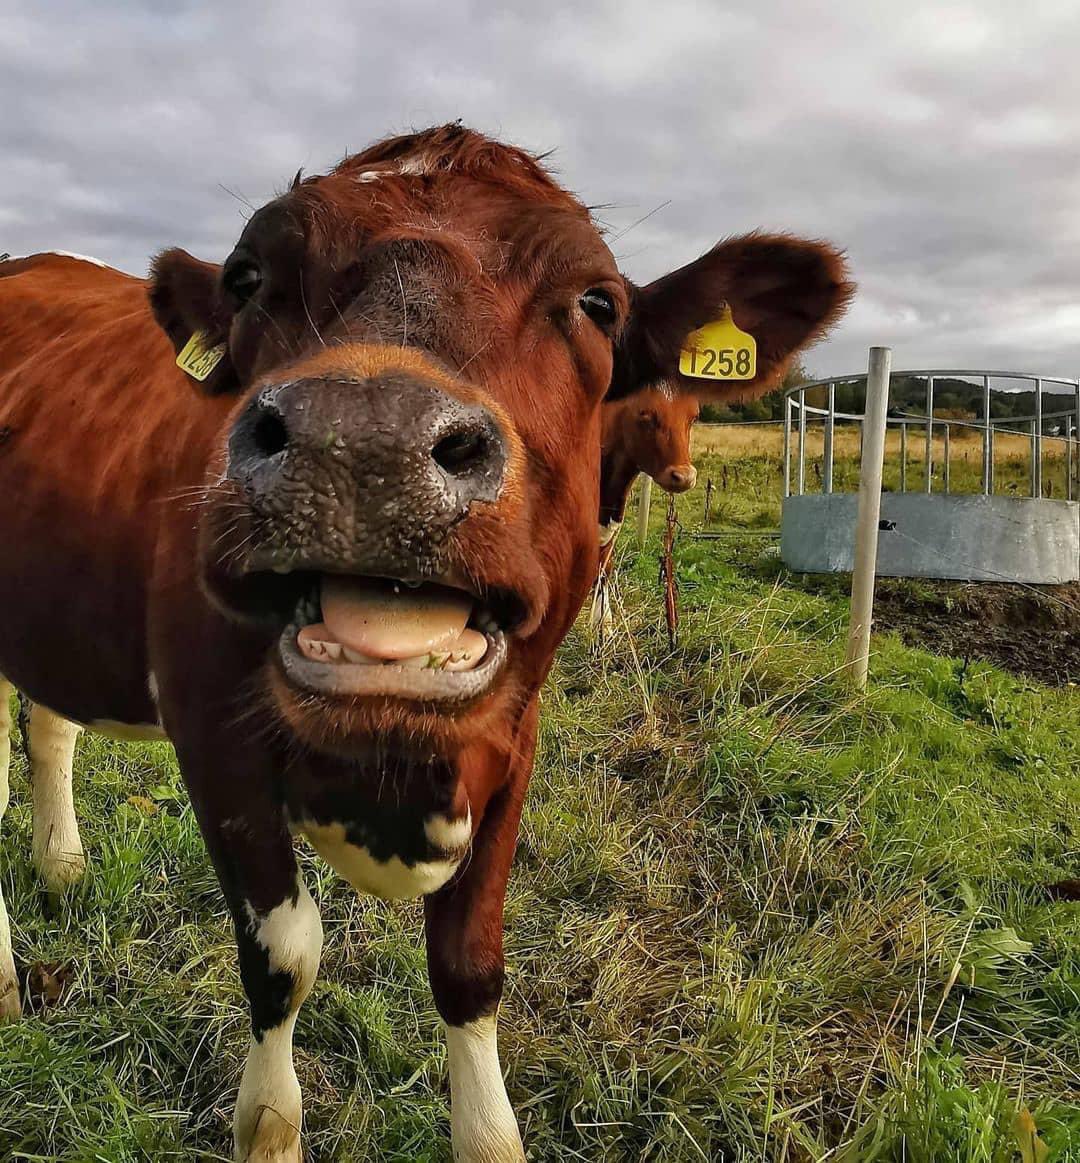 MULTISAL
CALIDAD A PRECIO JUSTO ®

_

#Repost @_cowphoto
• • • • • •
.
.
.
.
#cow #cows #country  #cowsofinstagram #cowstagram #cowphotography #beutiful 
#animalsoﬁnstagram #instacow #animalphotograpy #animallover #cuteanimals #photography #cattlecalf  #farm365